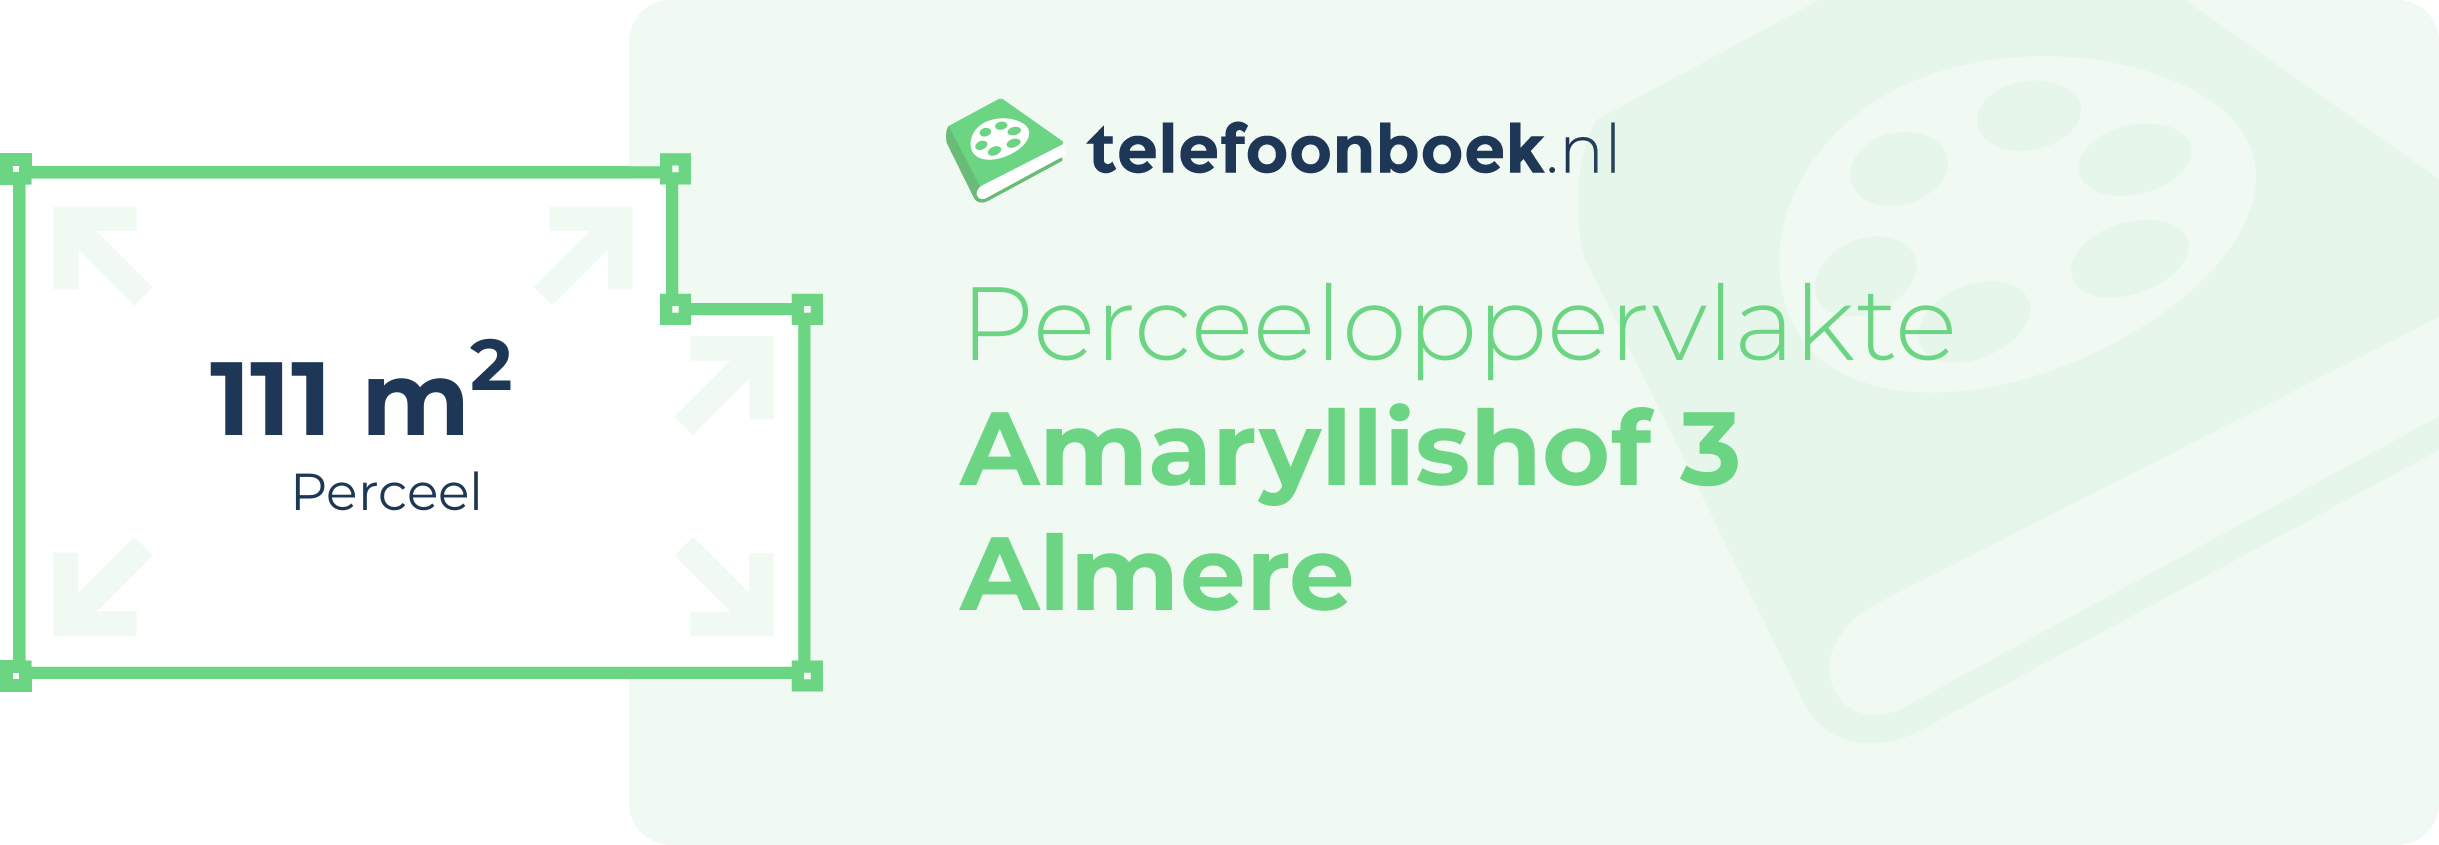 Perceeloppervlakte Amaryllishof 3 Almere